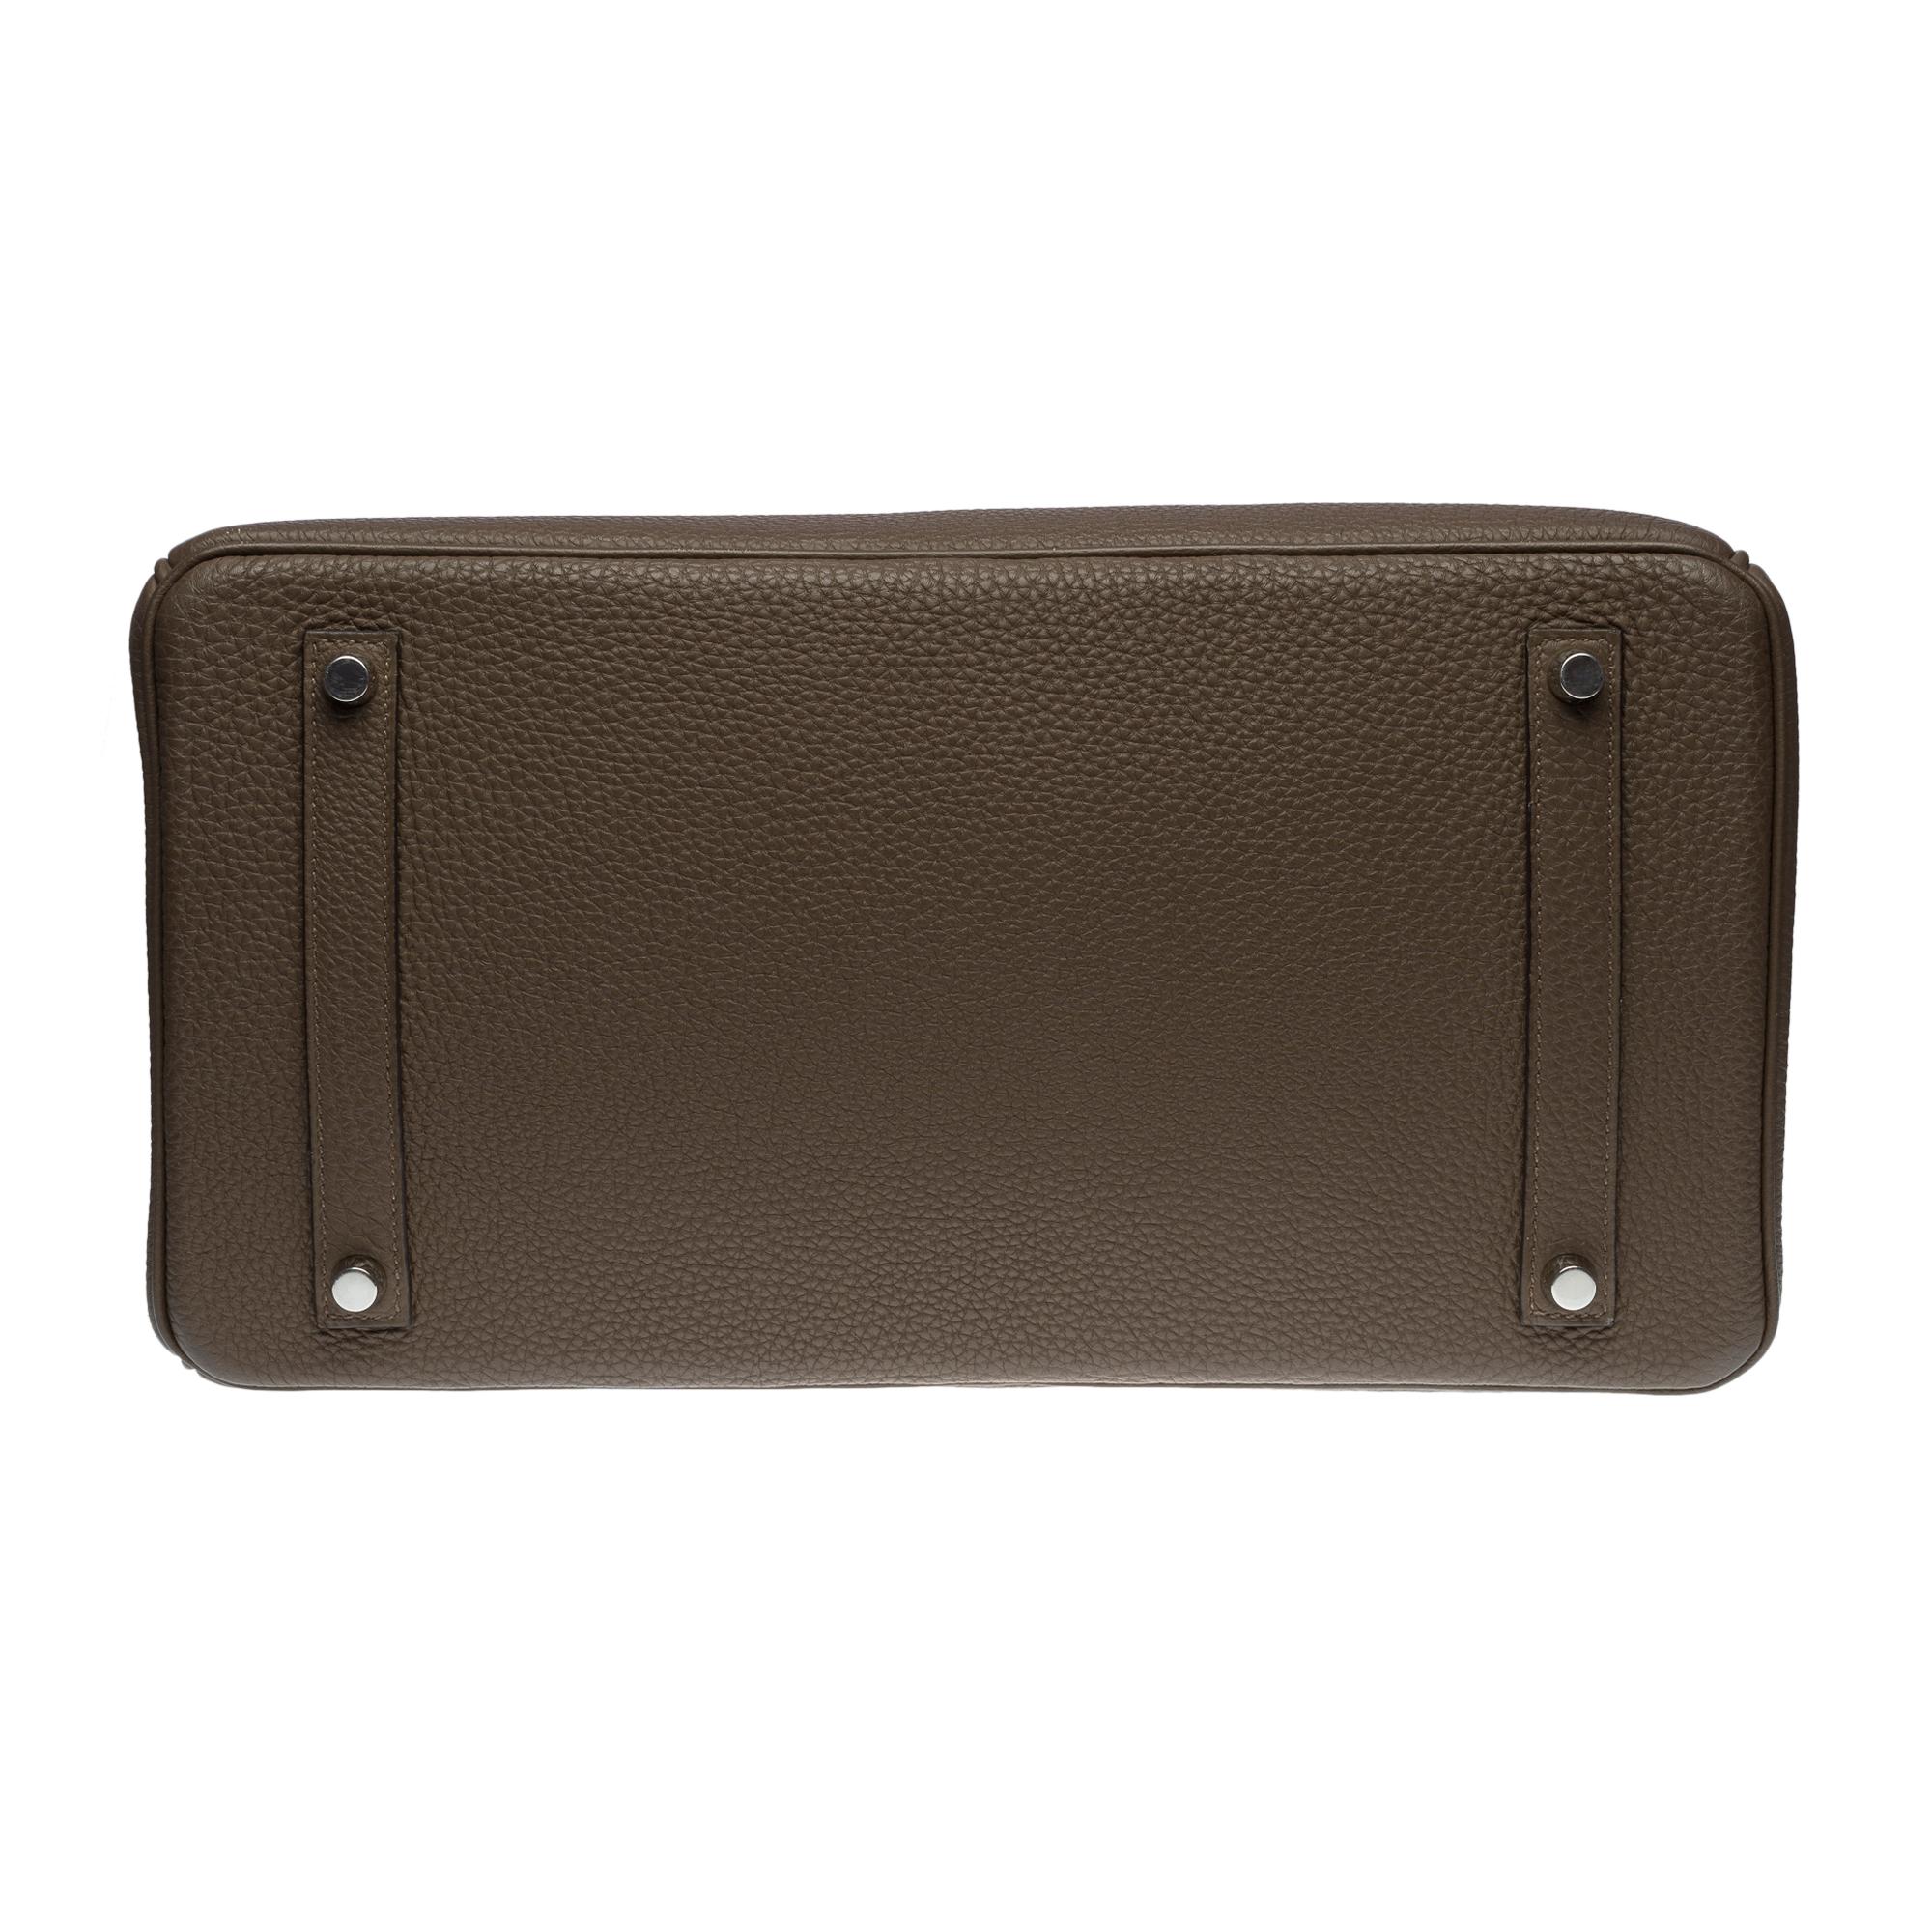 Magnificent Hermès Birkin 35 handbag in Gris Elephant Togo leather, SHW 6